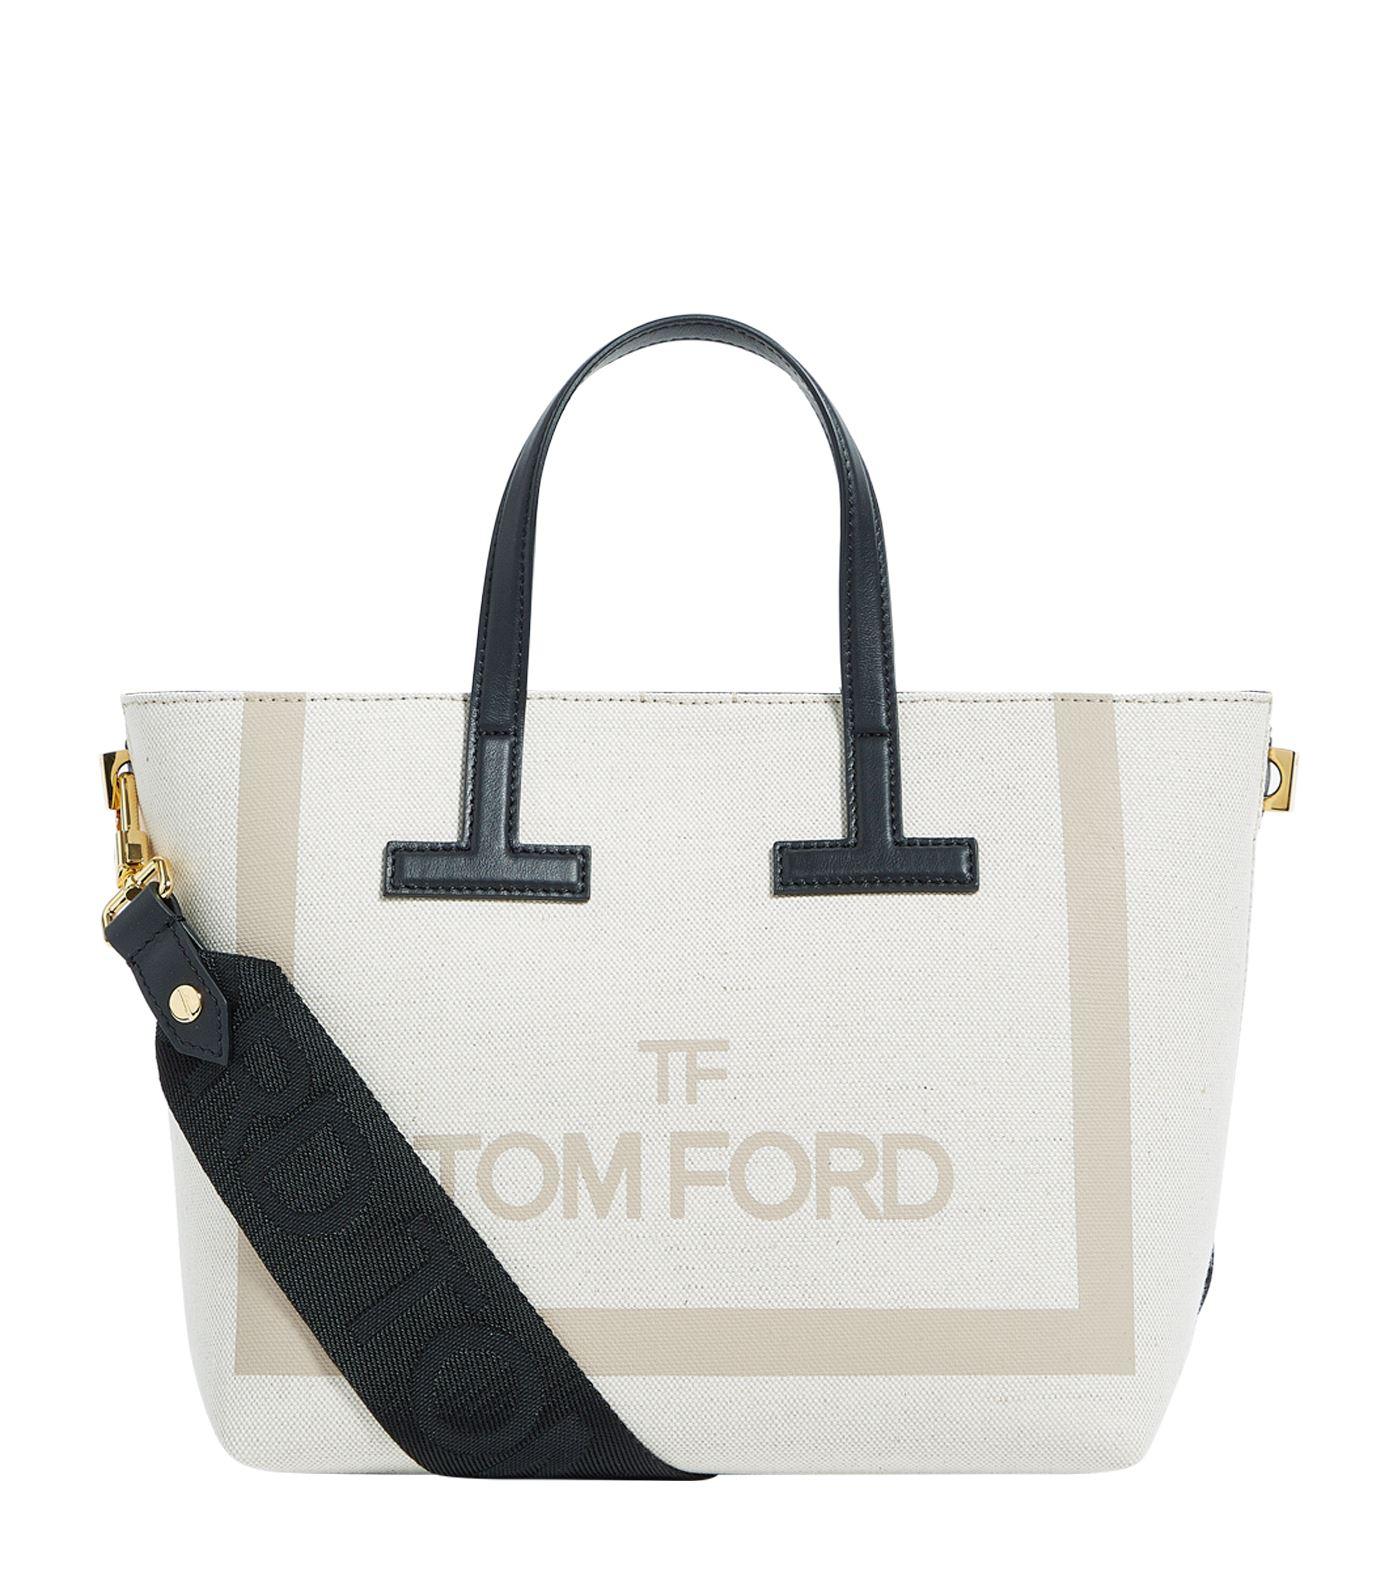 Tom Ford Canvas Mini Logo Shopping Tote Bag Black/Gold